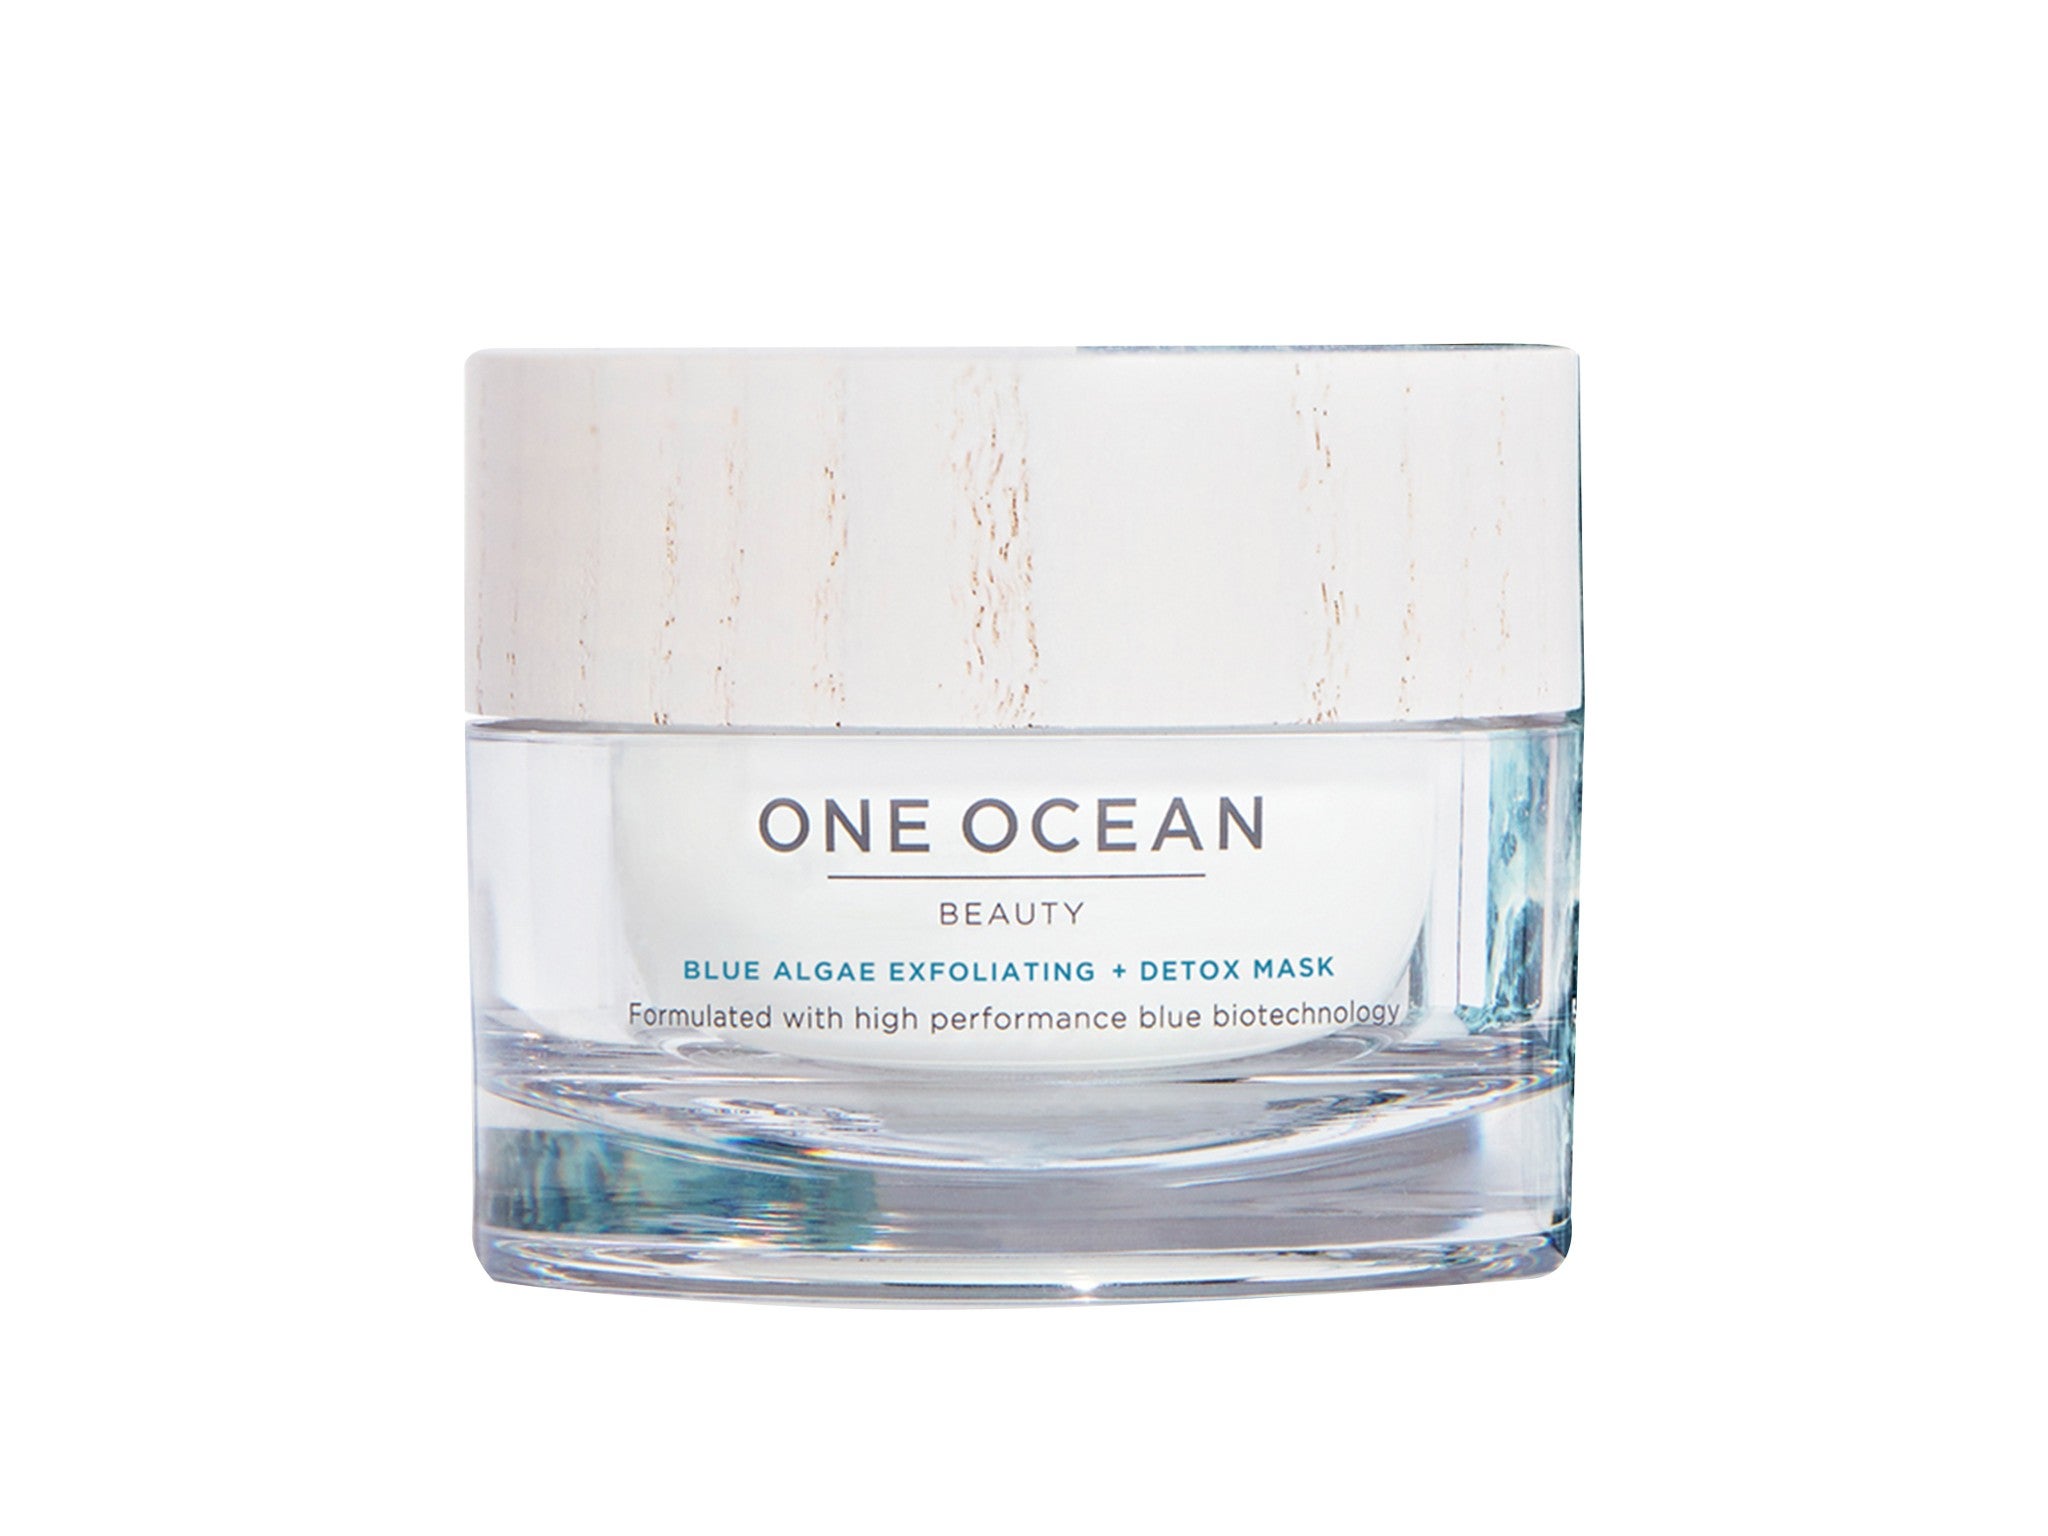 One Ocean beauty blue algae exfoliating + detox mask indybest.jpeg